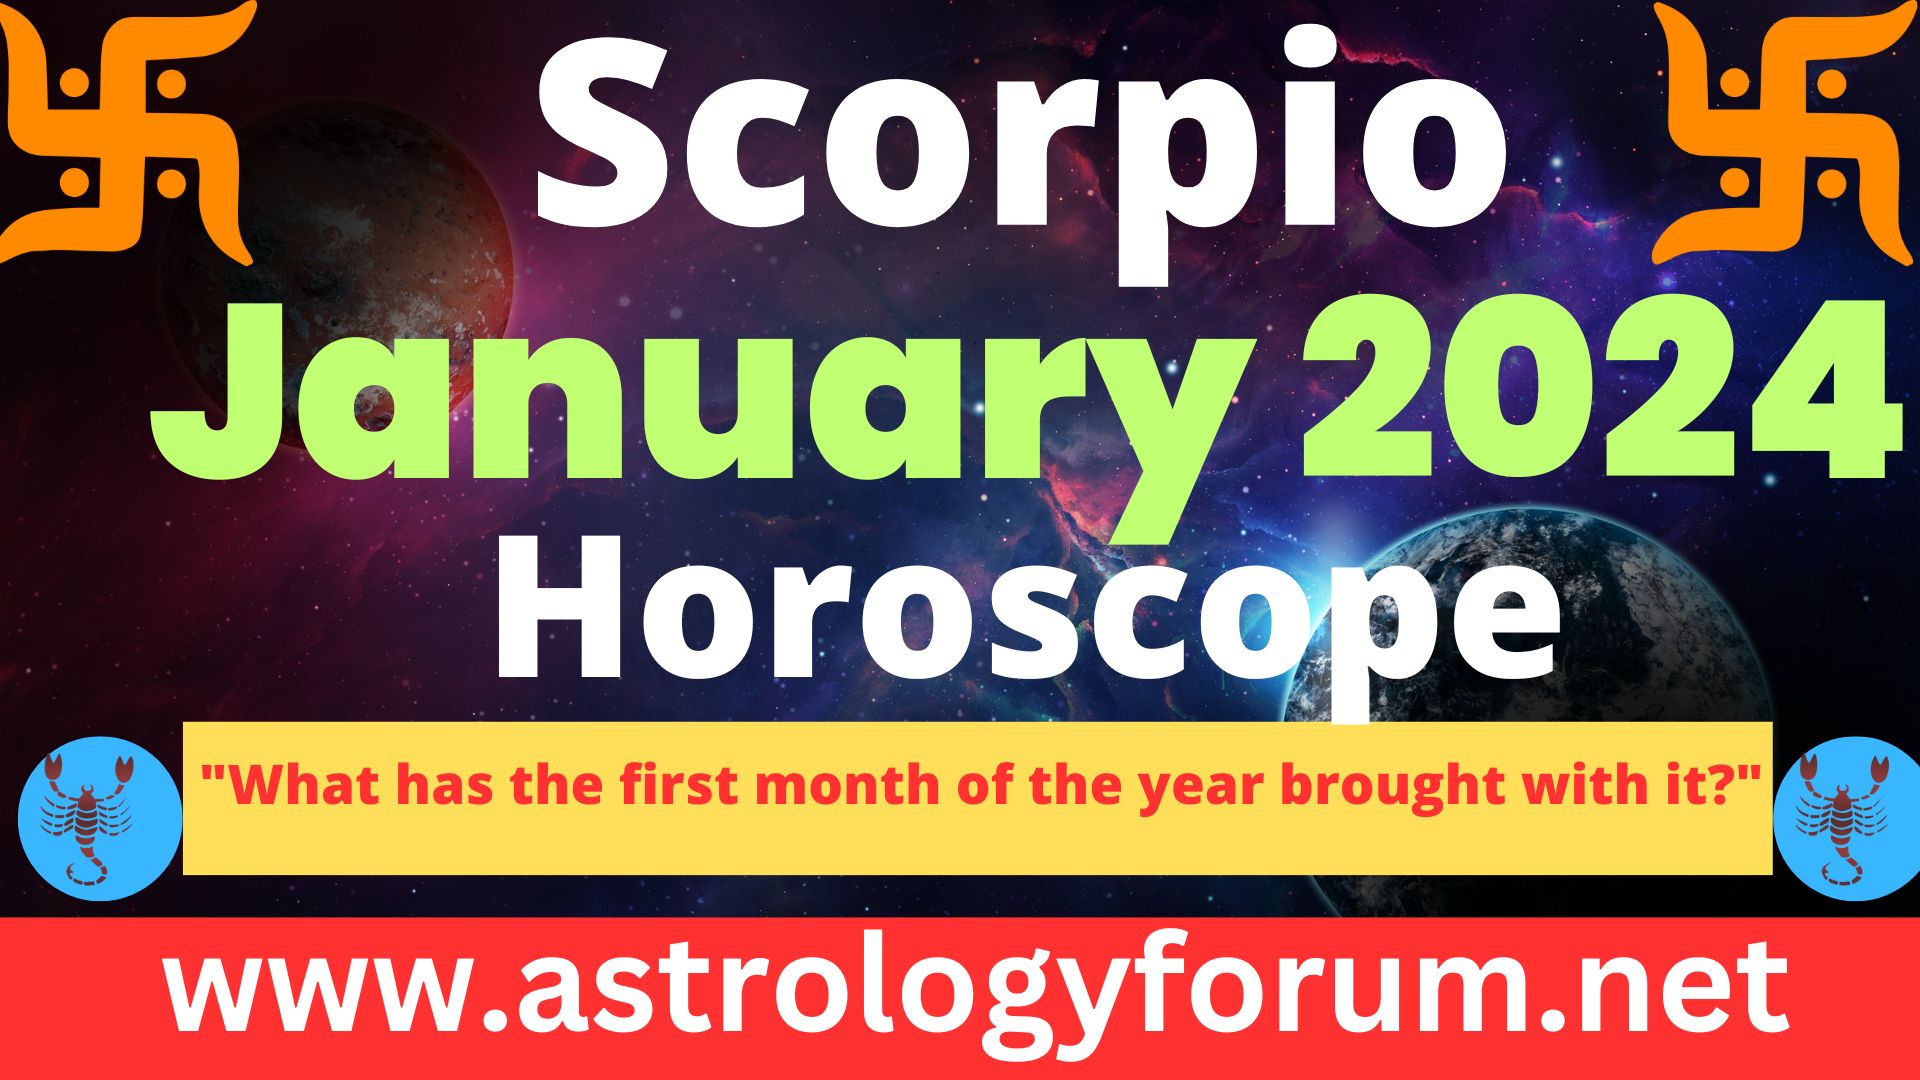 Scorpio Horoscope January 2024 Best Ebooks, Mathematics, Astrology